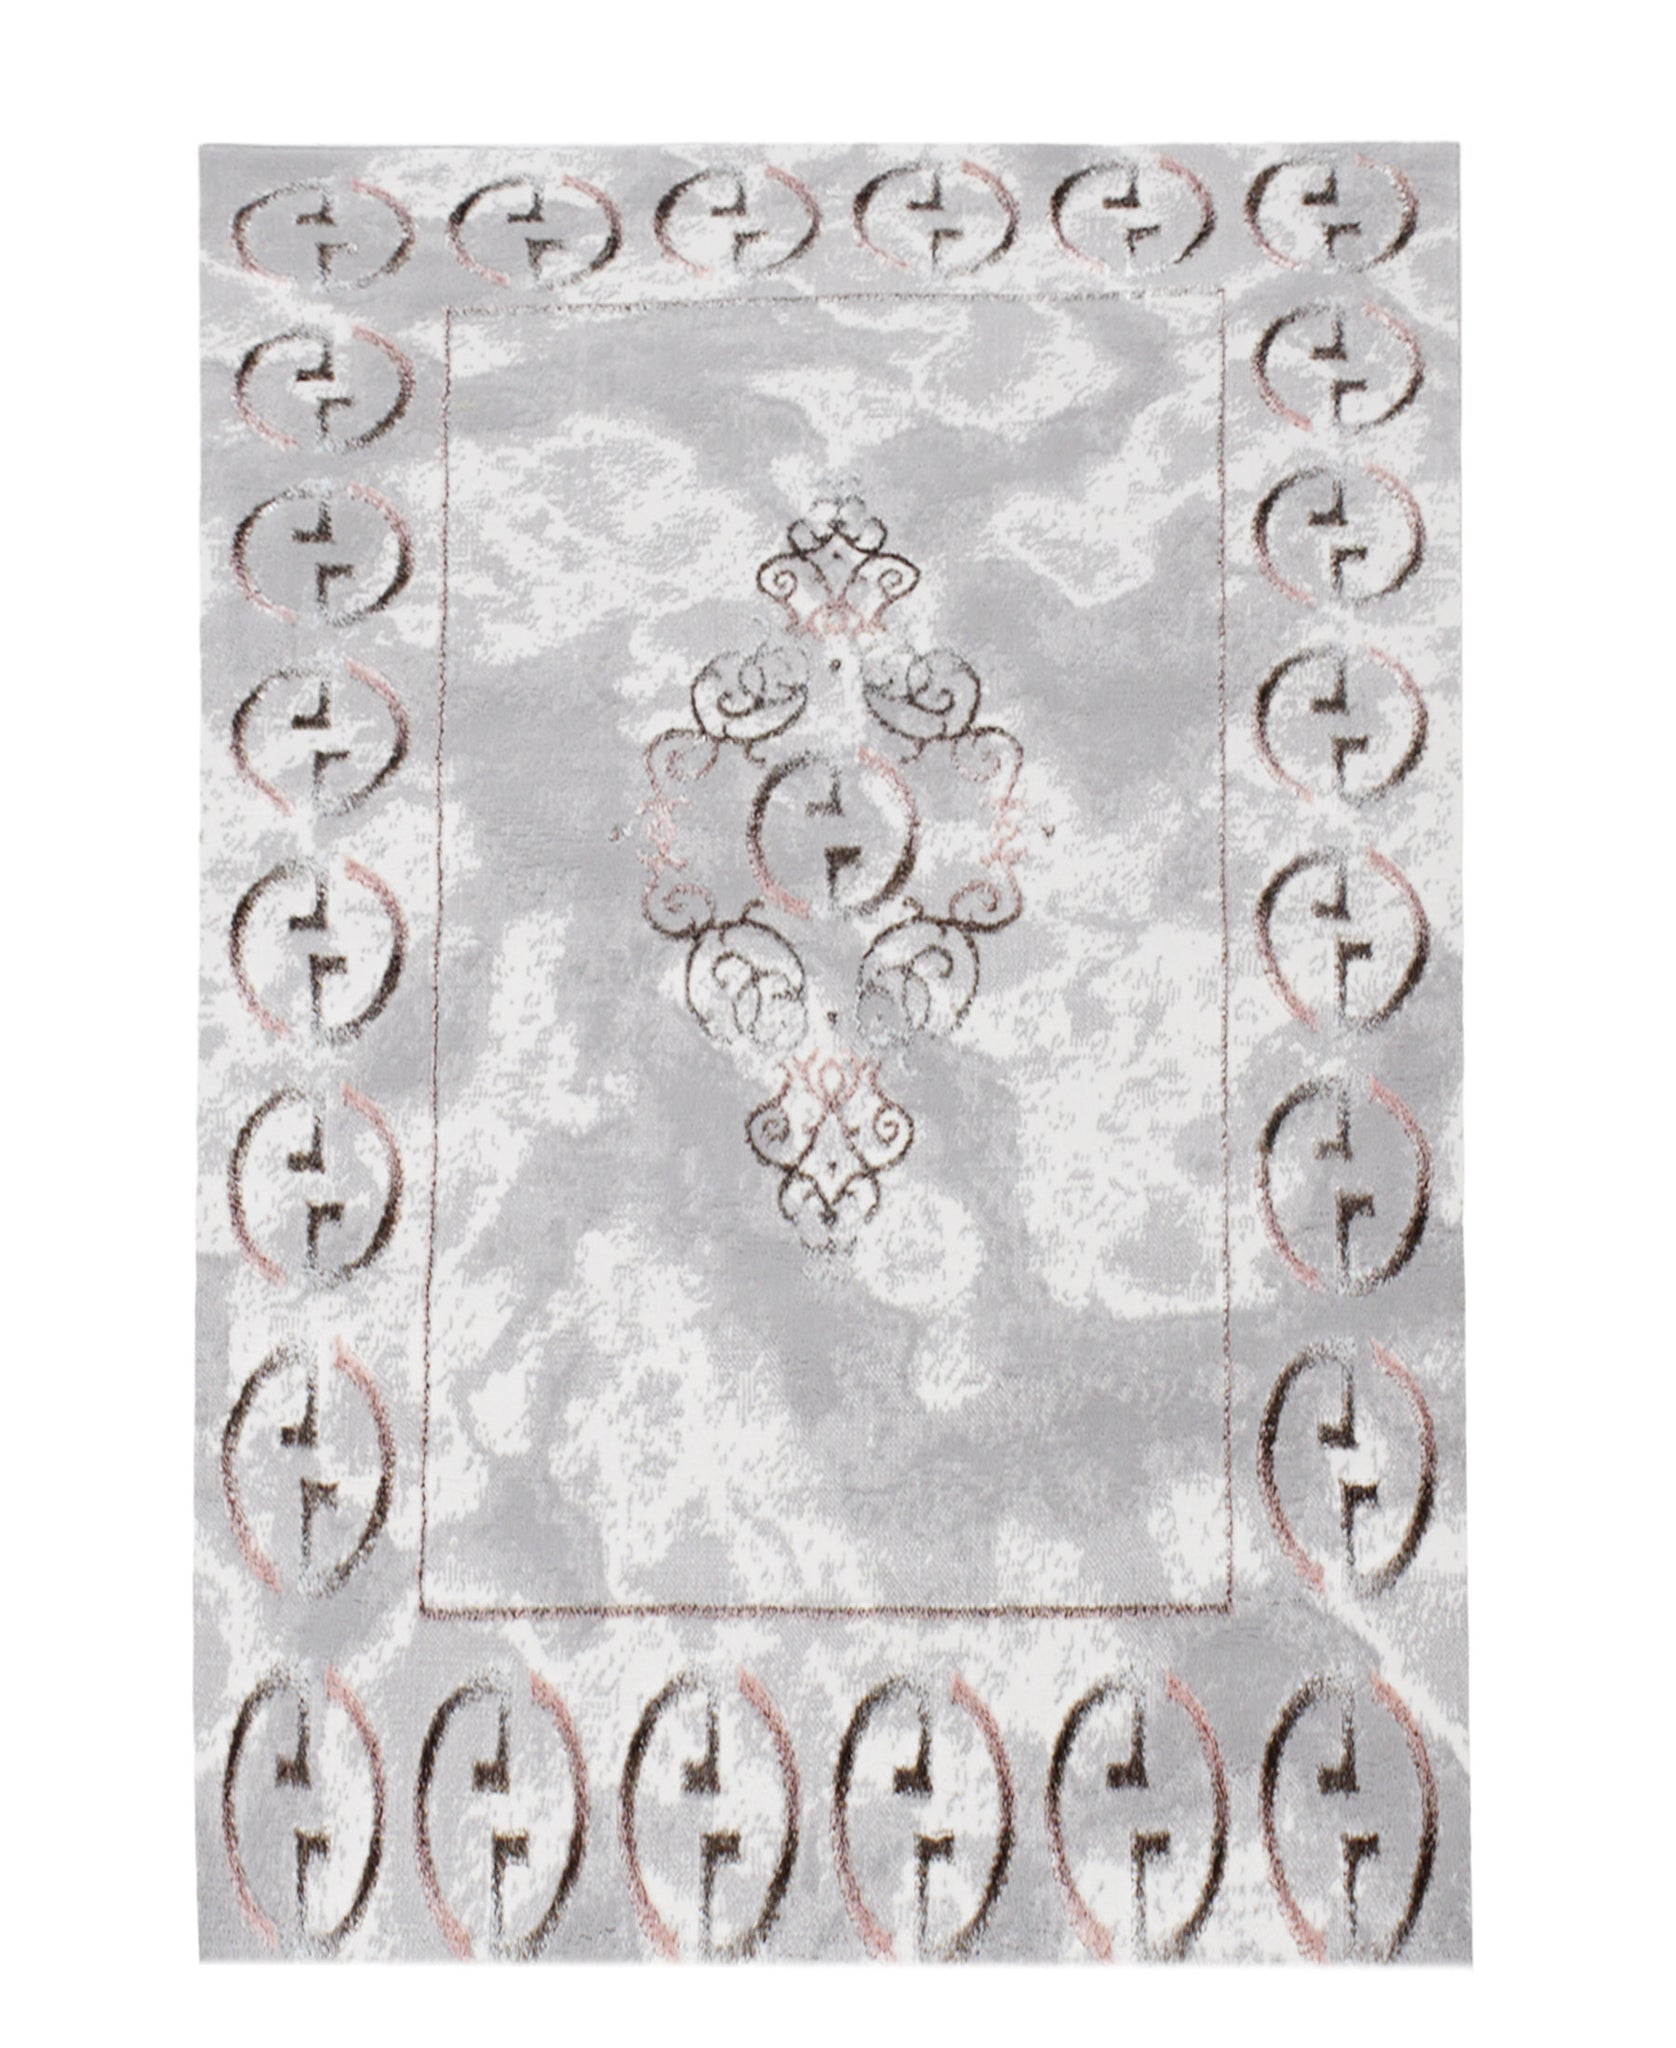 Bodrum Gucci Carpet 500mm X 800mm - Grey